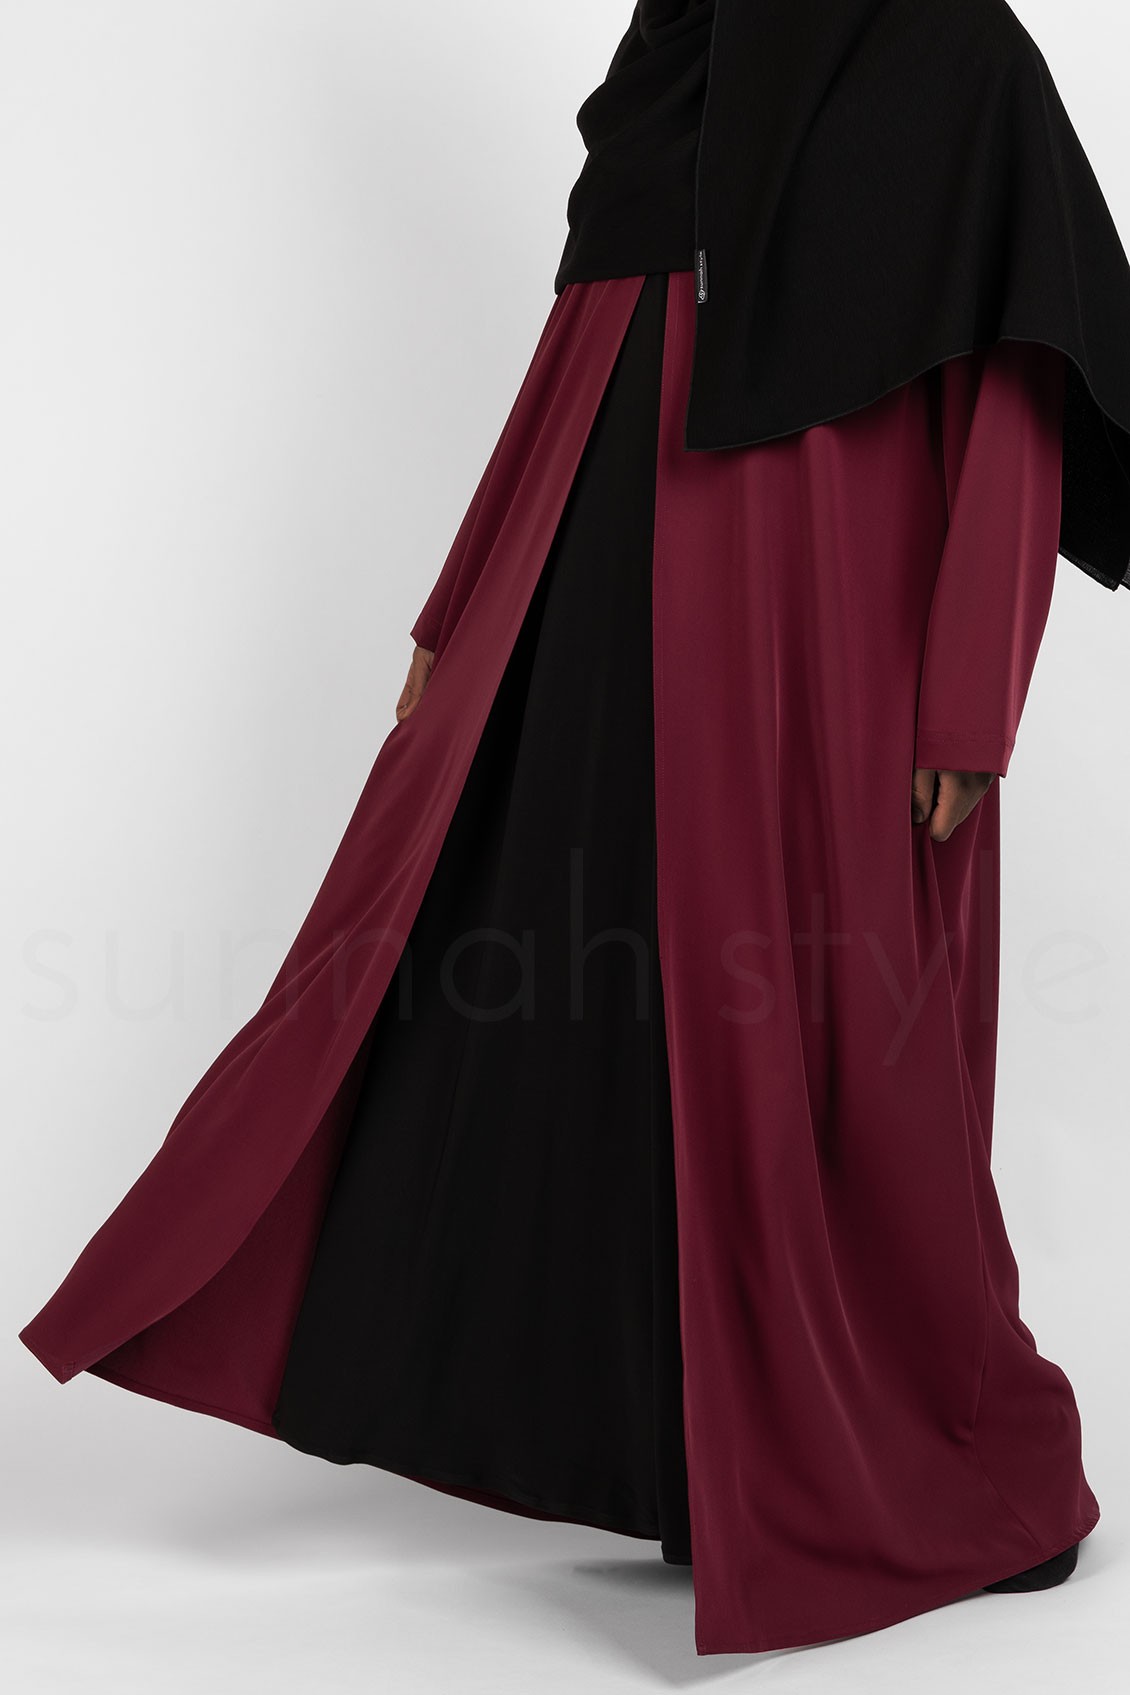 Sunnah Style Classic Robe Burgundy